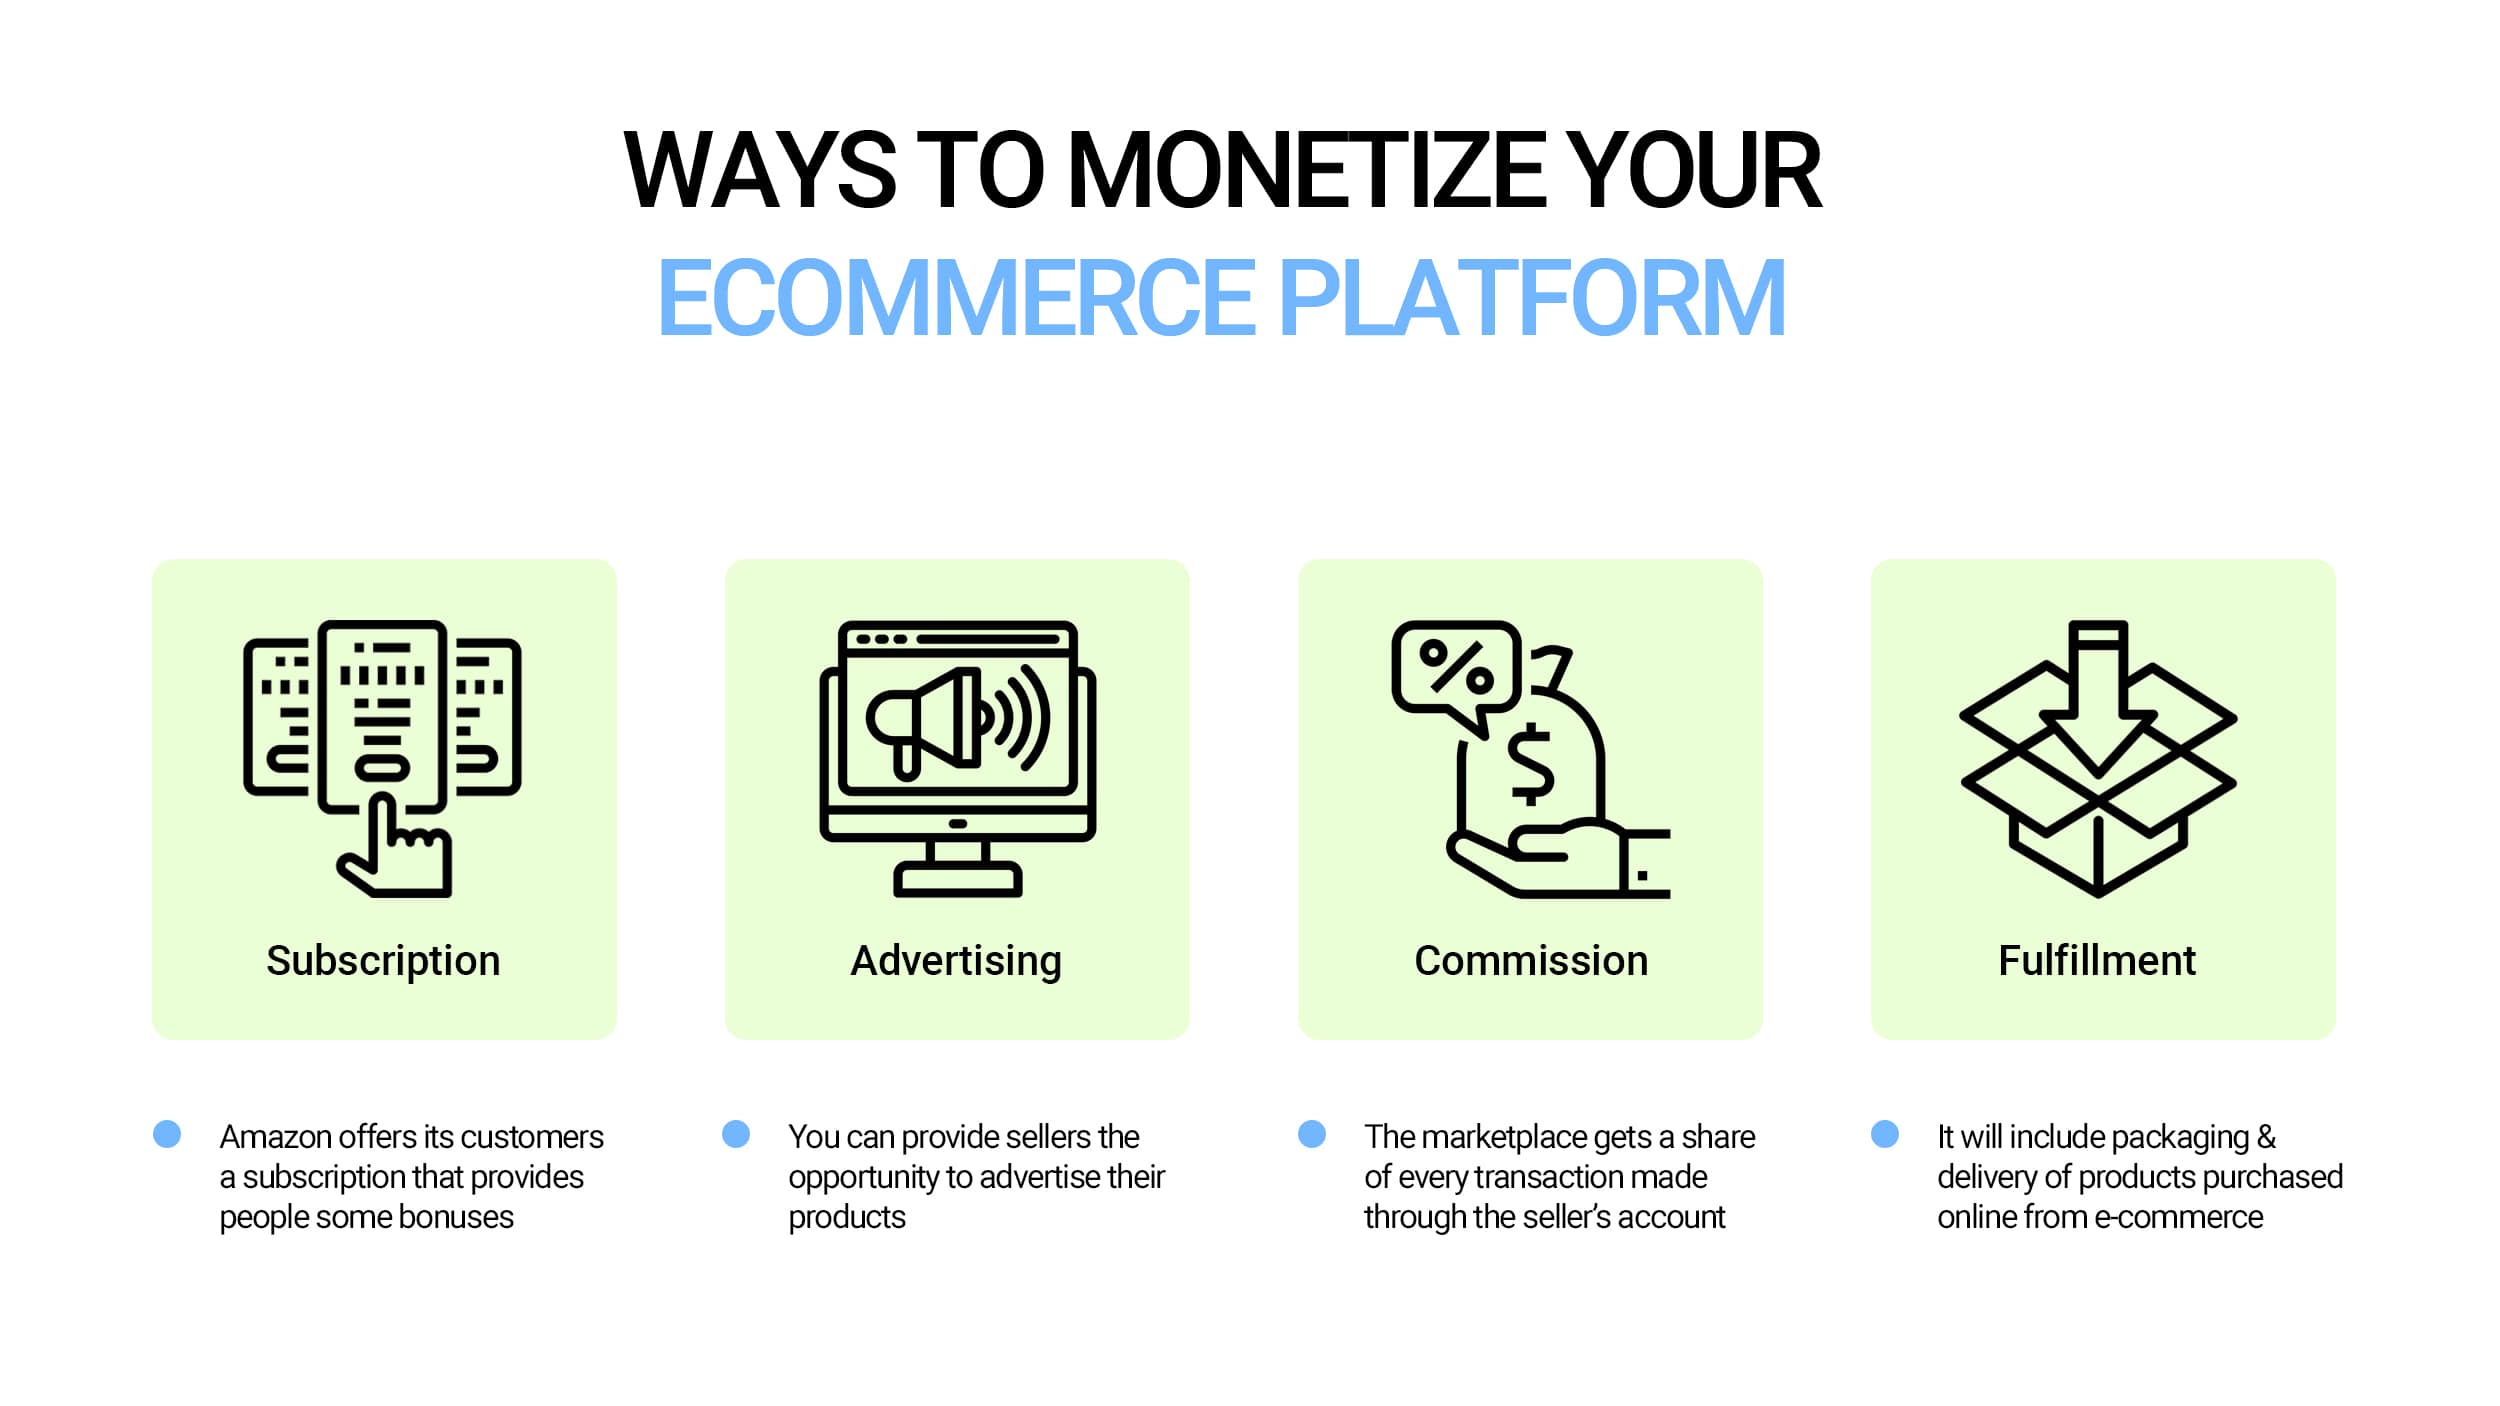 Ways to monetize your ecommerce platform